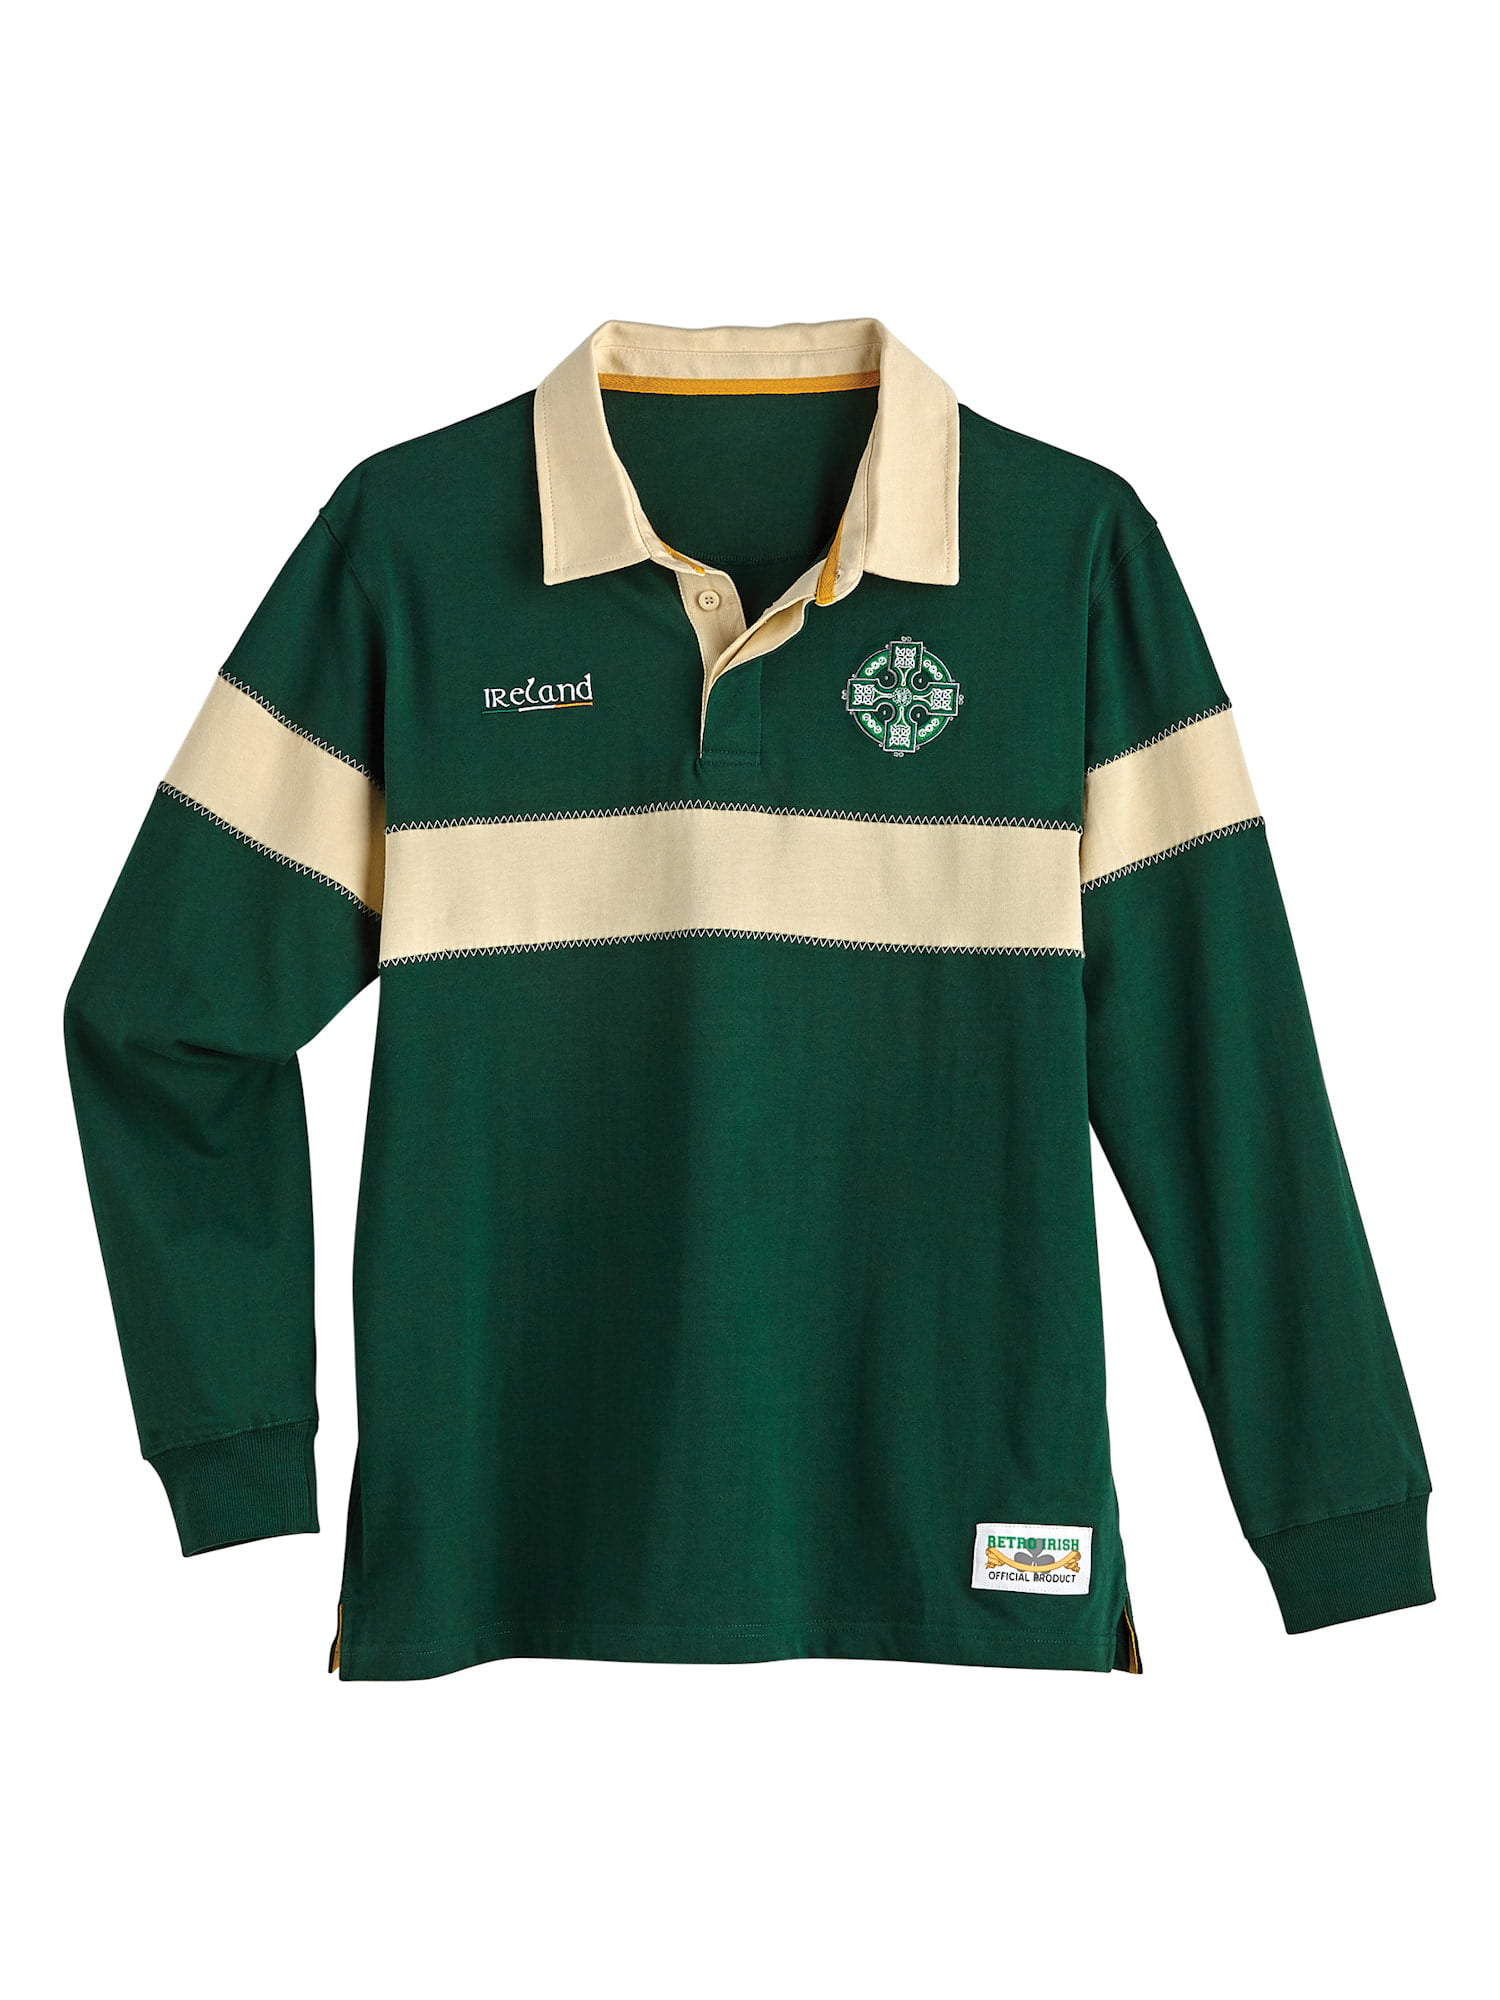 Activewear Ireland Irish Rugby Ireland Full Sleeve Supporter Shirts Size S to 3XL